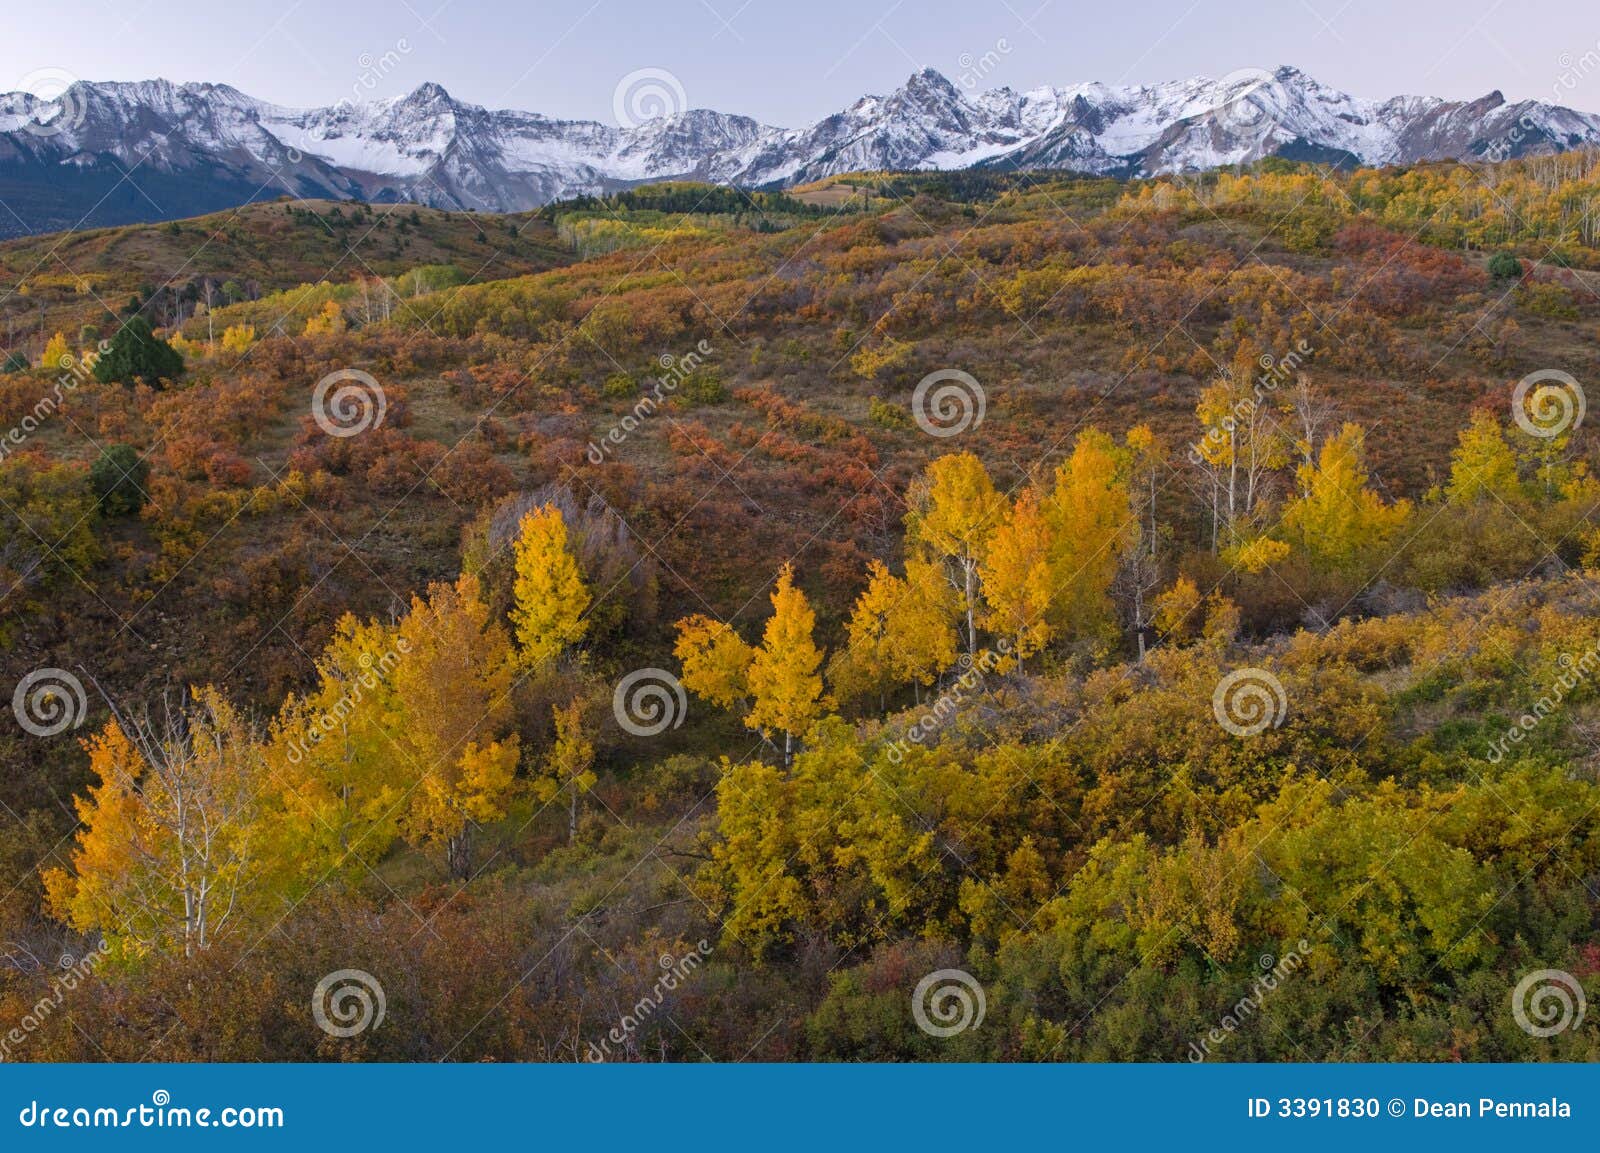 autumn dallas divide colorado